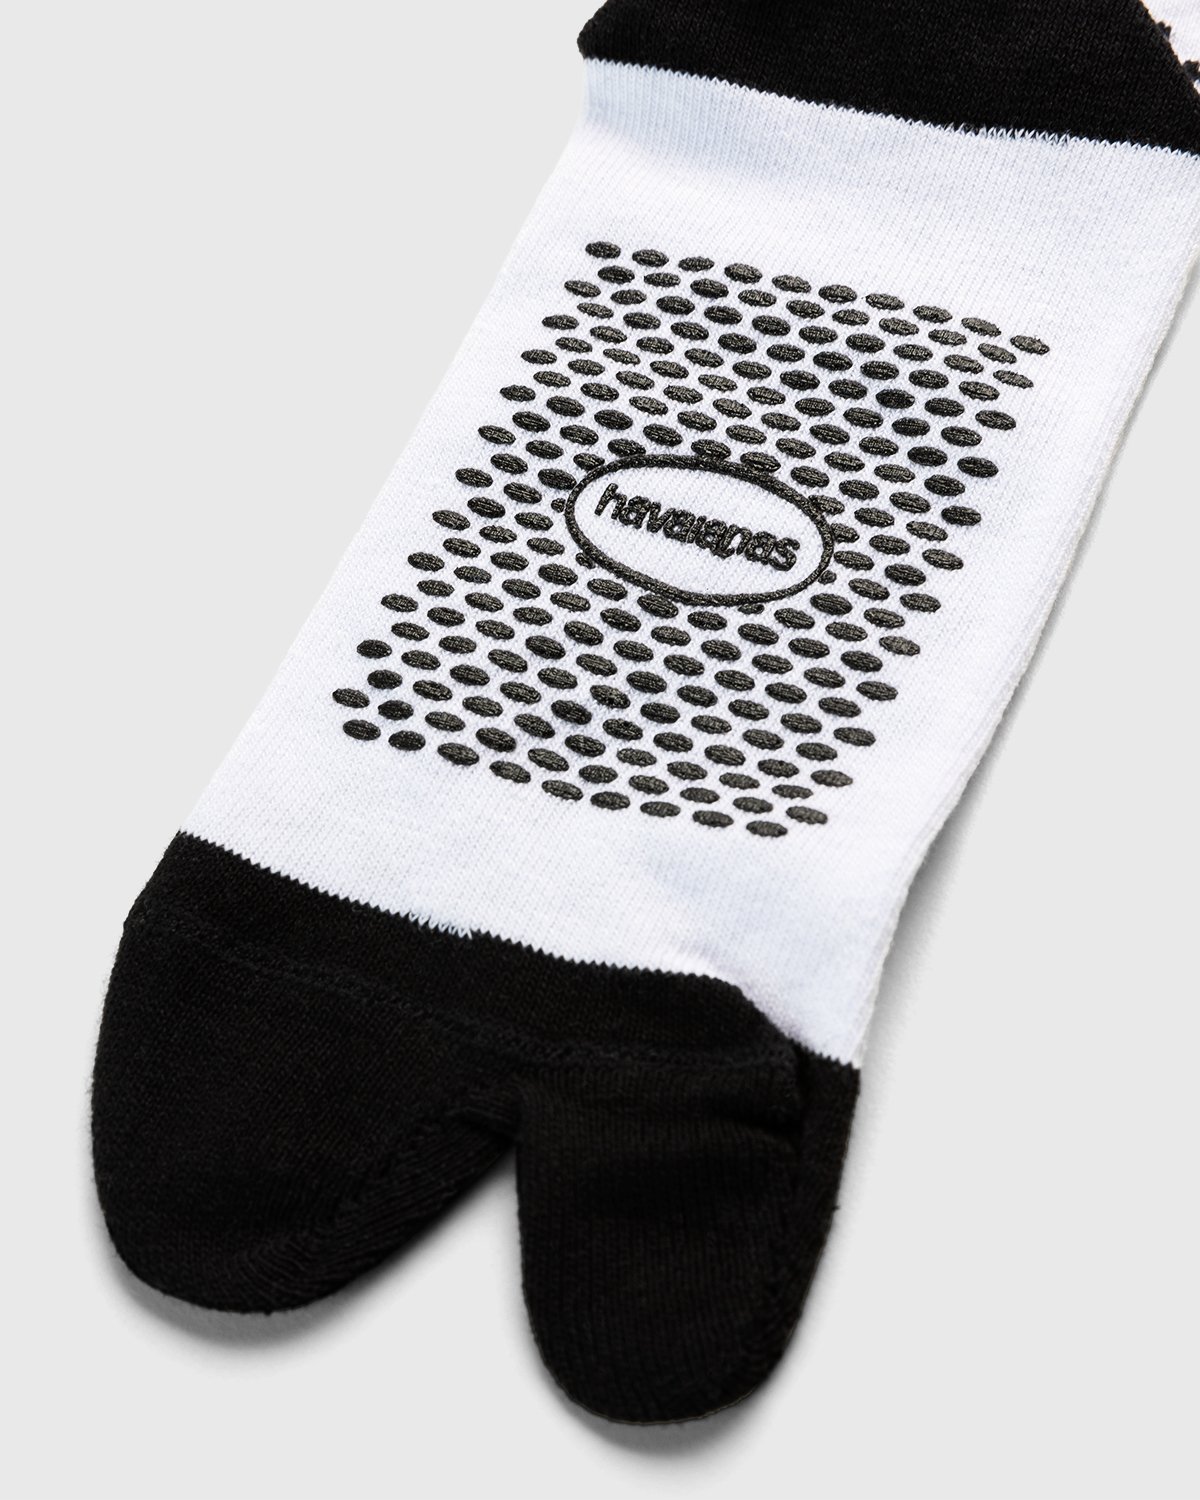 havaianas - Reality to Idea by Joshuas Vides Split-Toe Socks White - Accessories - White - Image 4